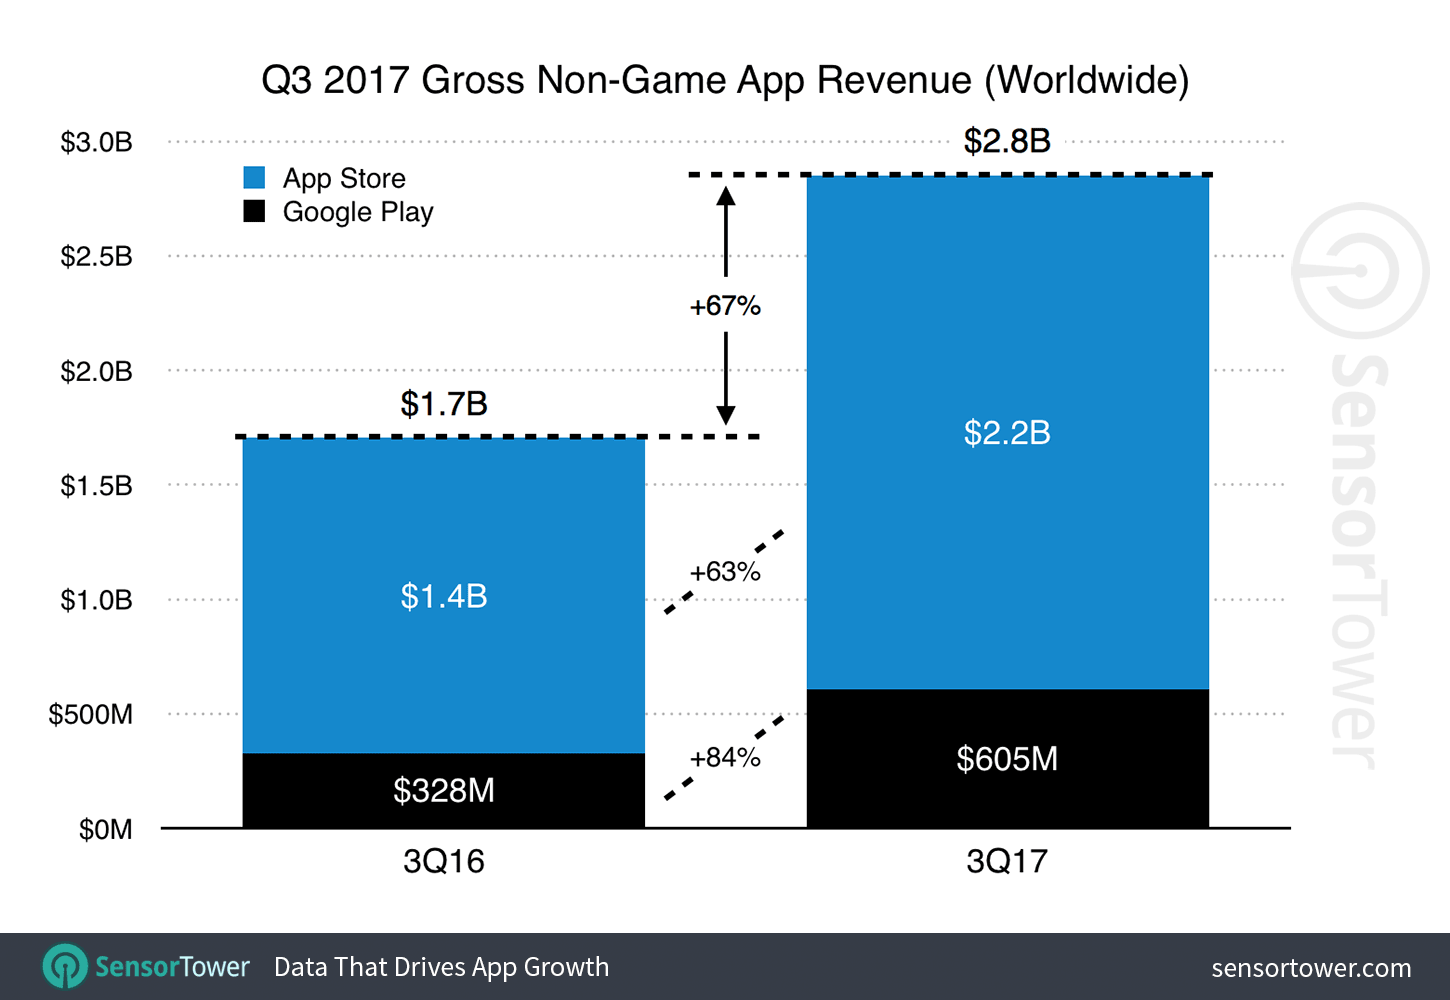 Q3 2017 Apps Worldwide Revenue Growth